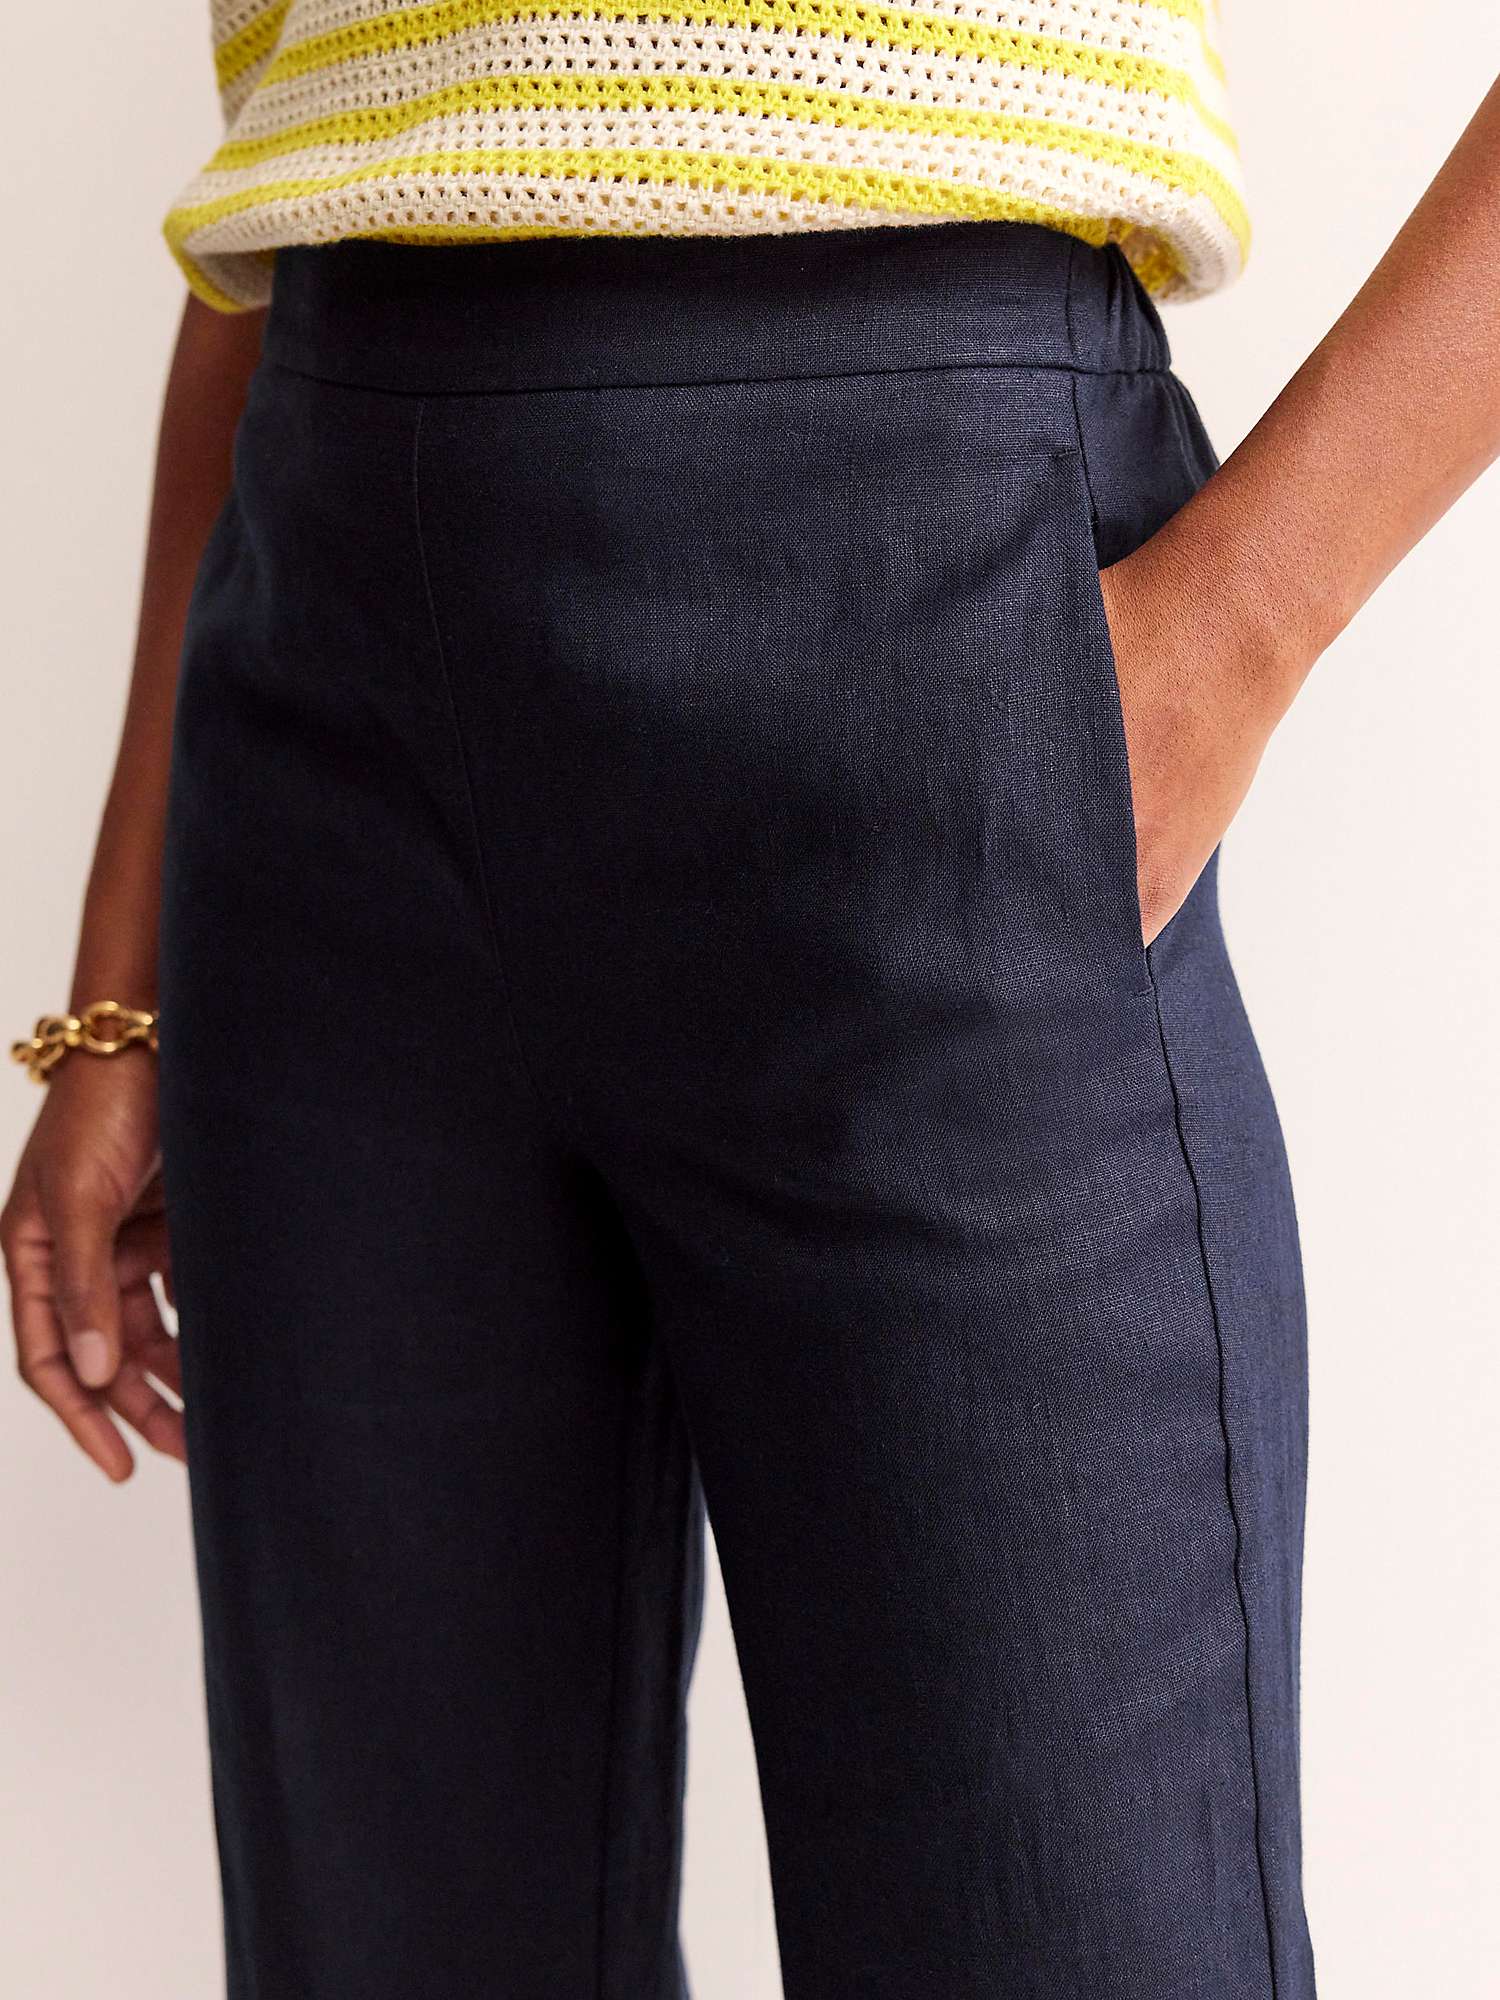 Buy Boden Hampstead Linen Trousers, Navy Online at johnlewis.com